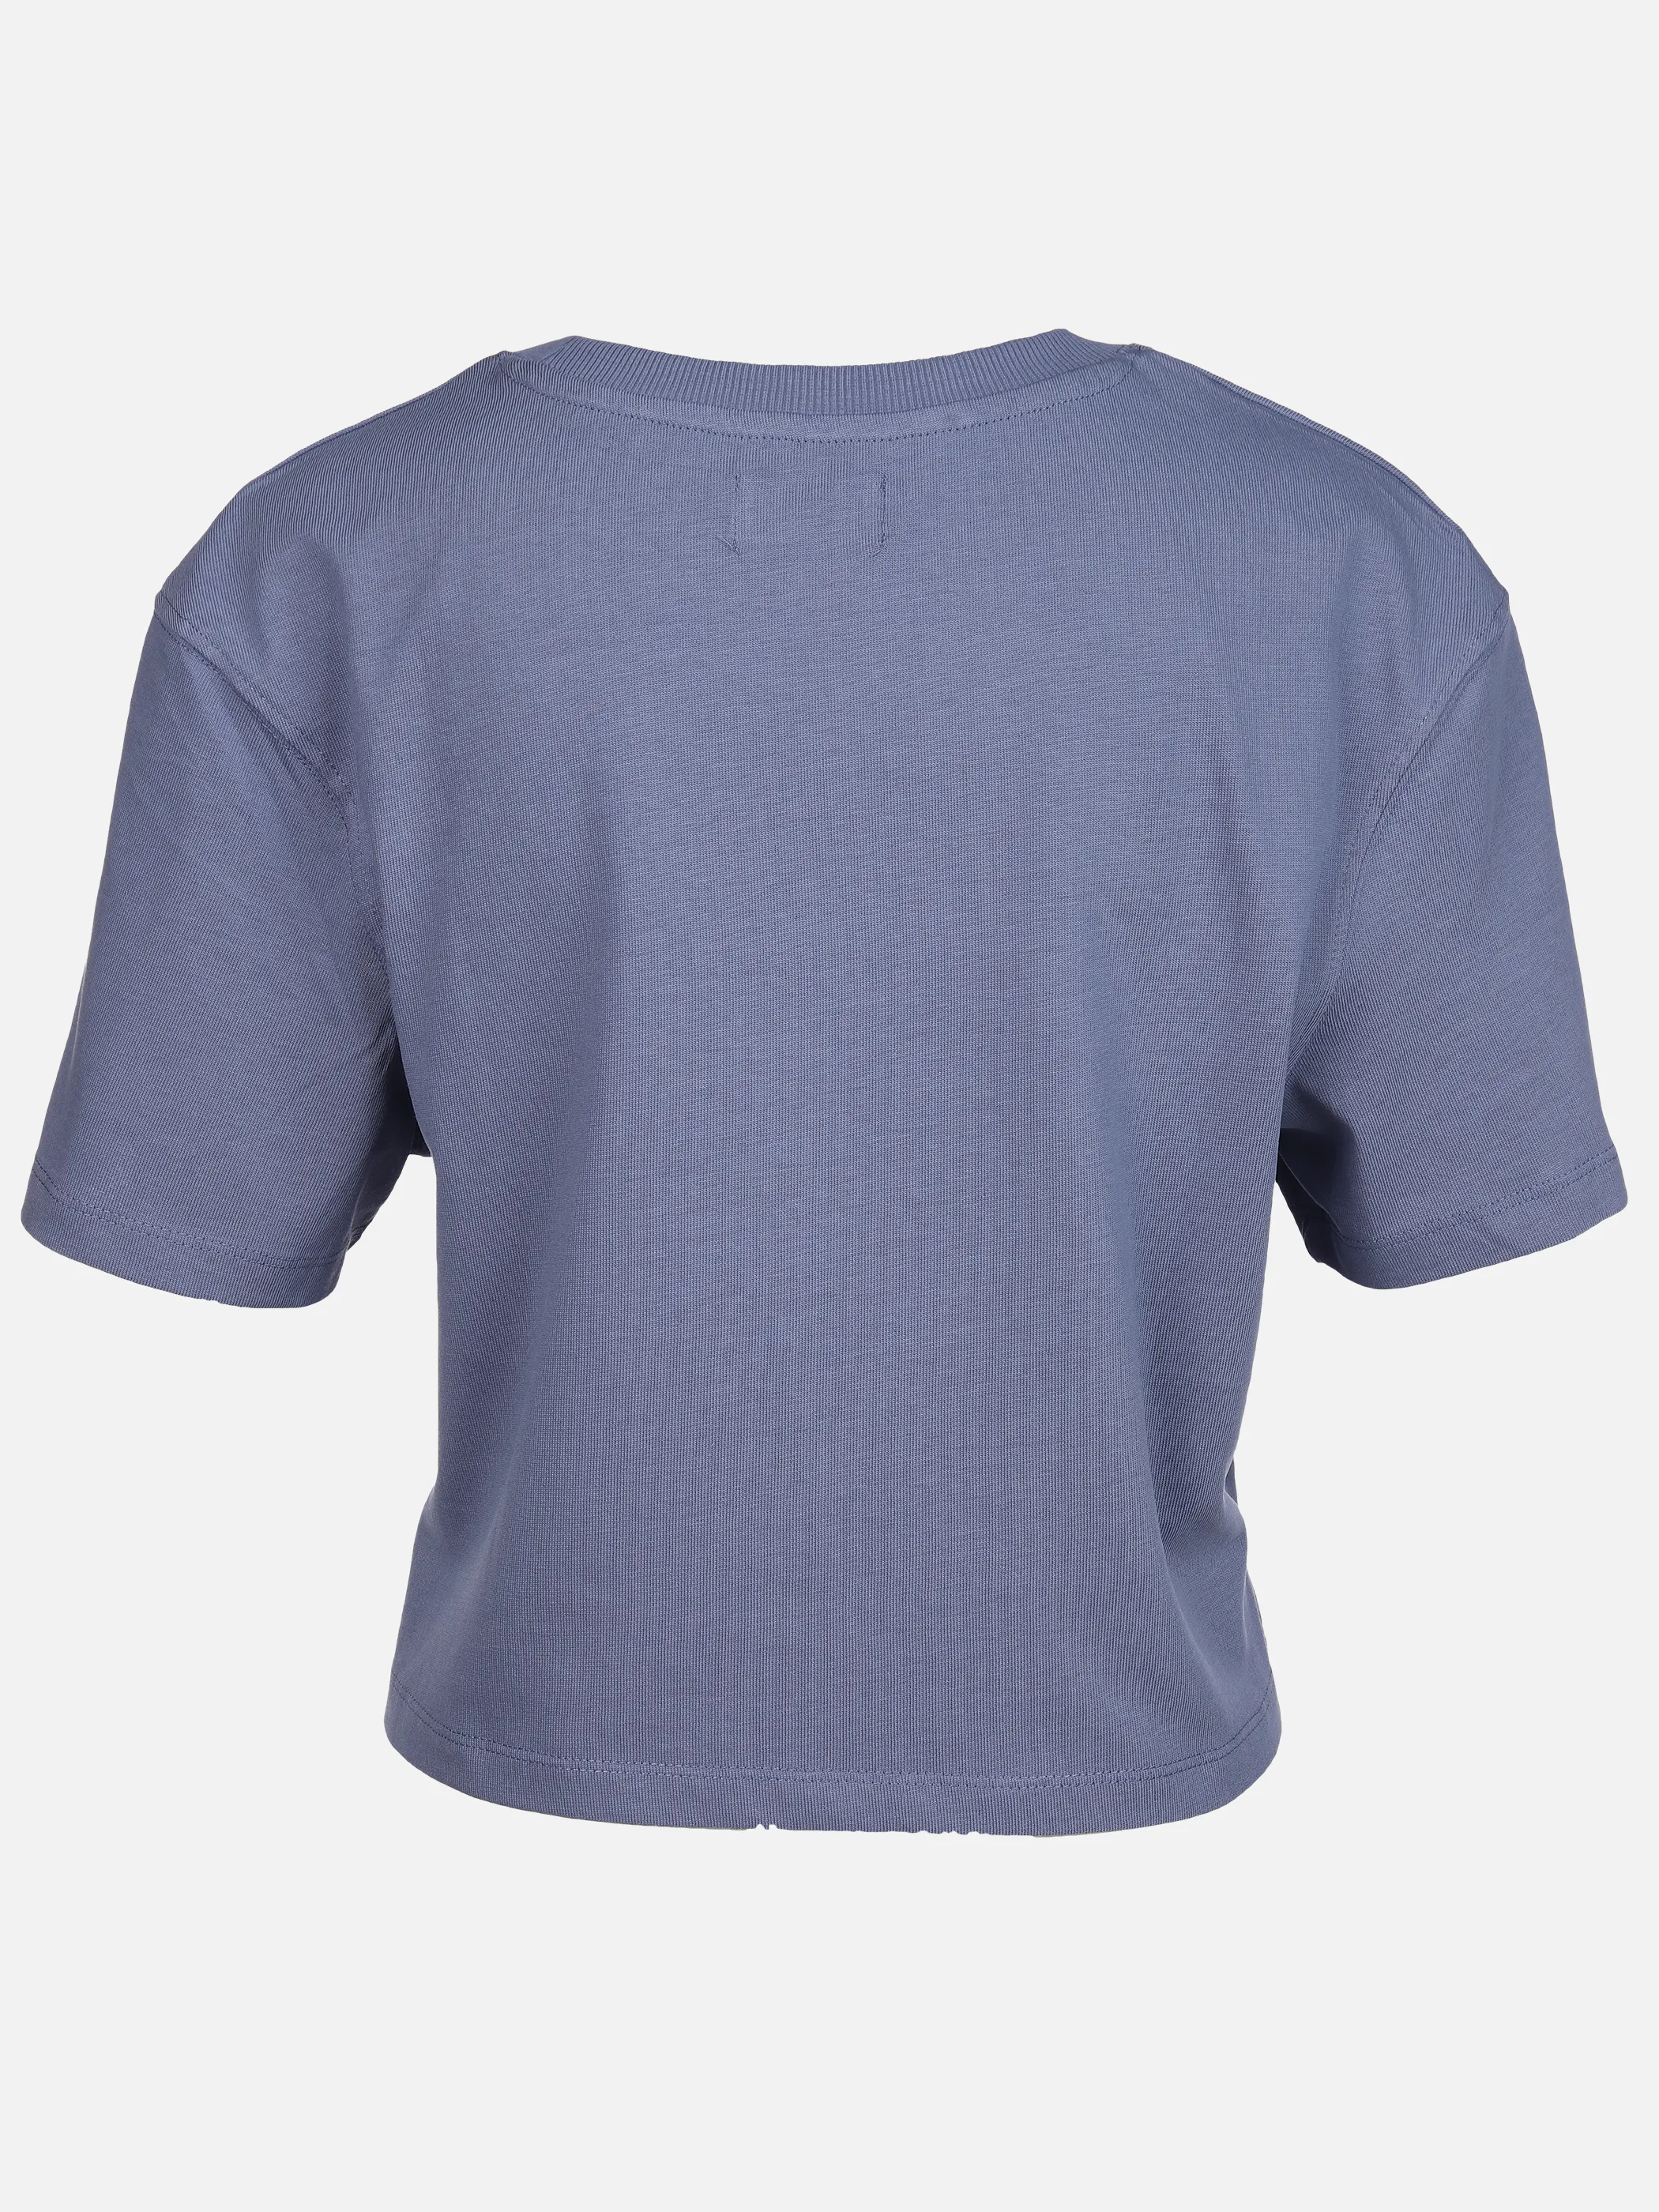 IX-O YF-Da T-Shirt Blau 890371 BLUE 2